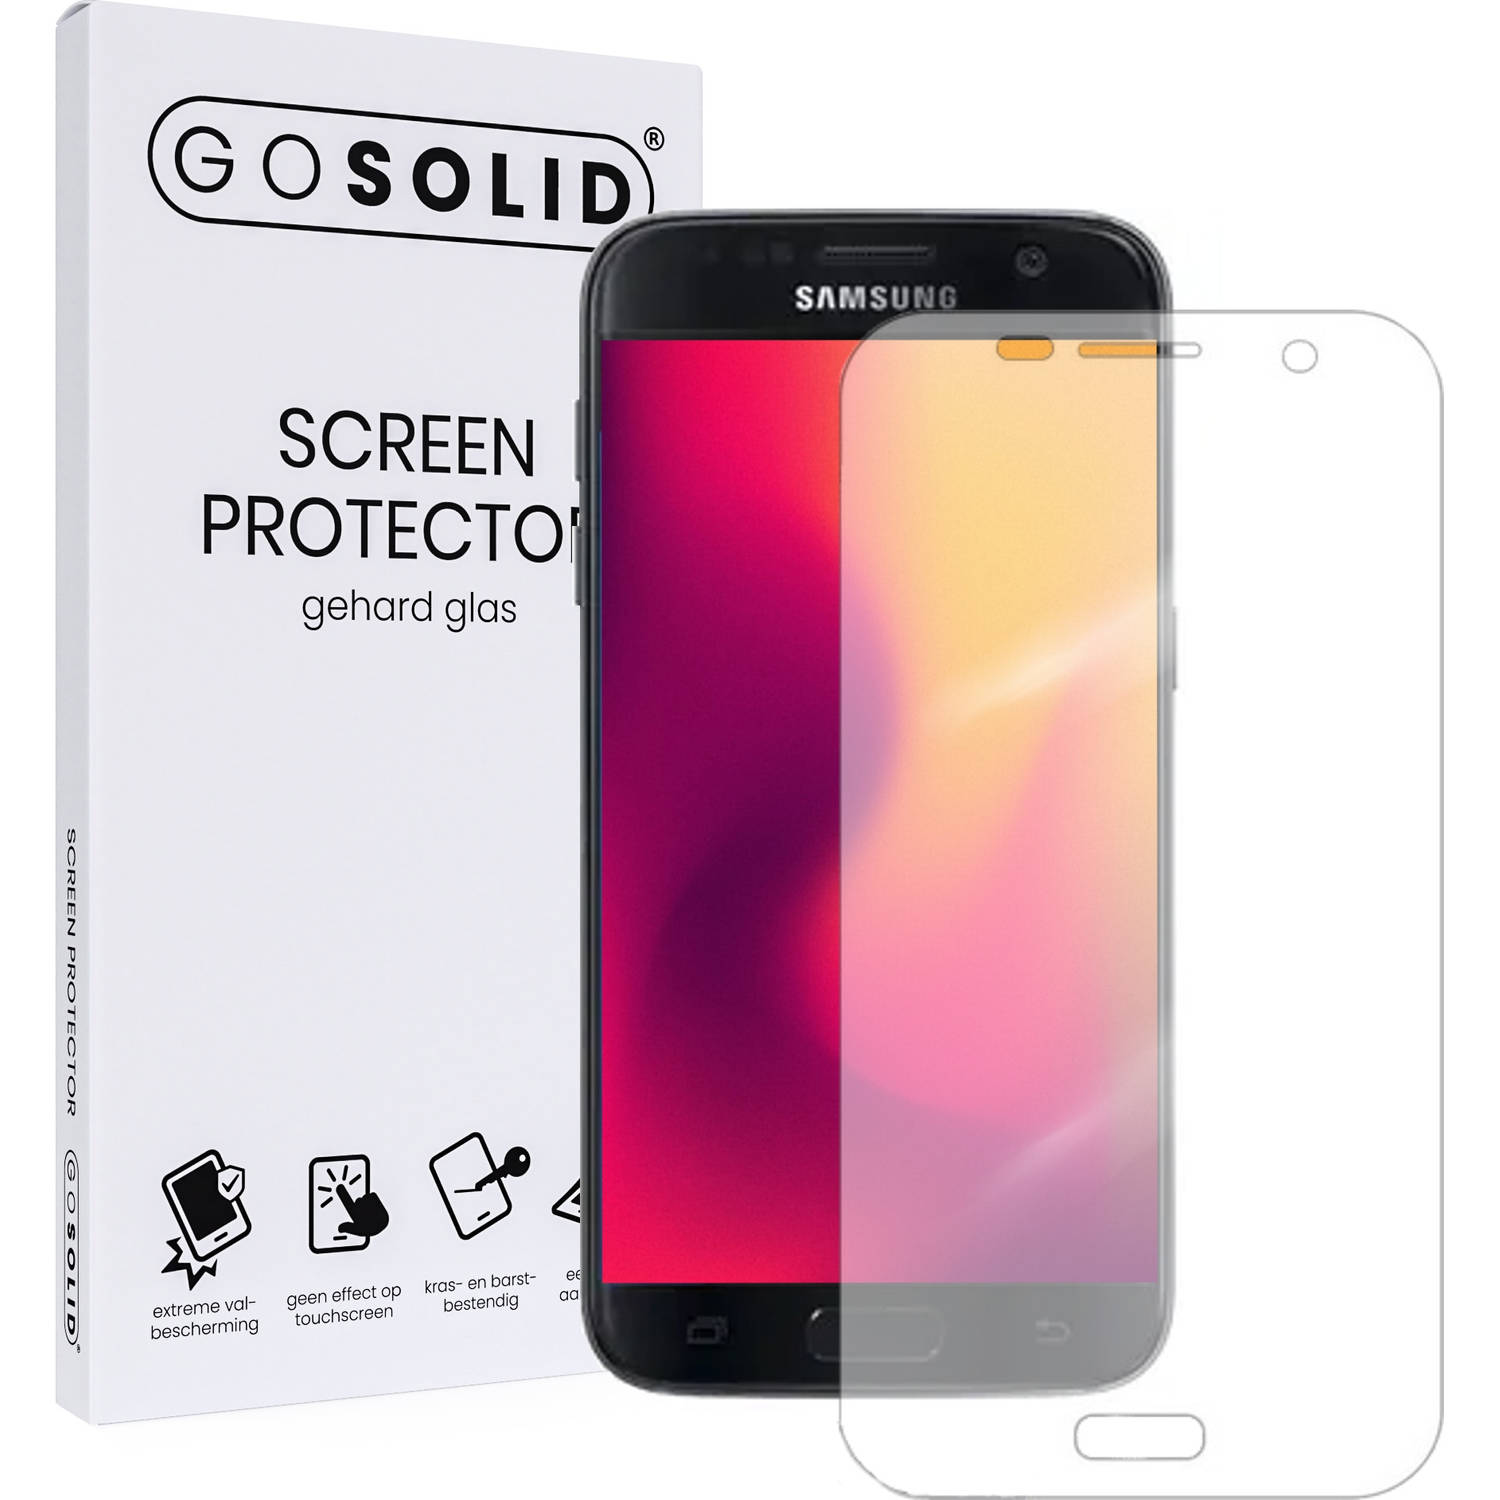 GO SOLID! Samsung Galaxy J3 2017 screenprotector gehard glas